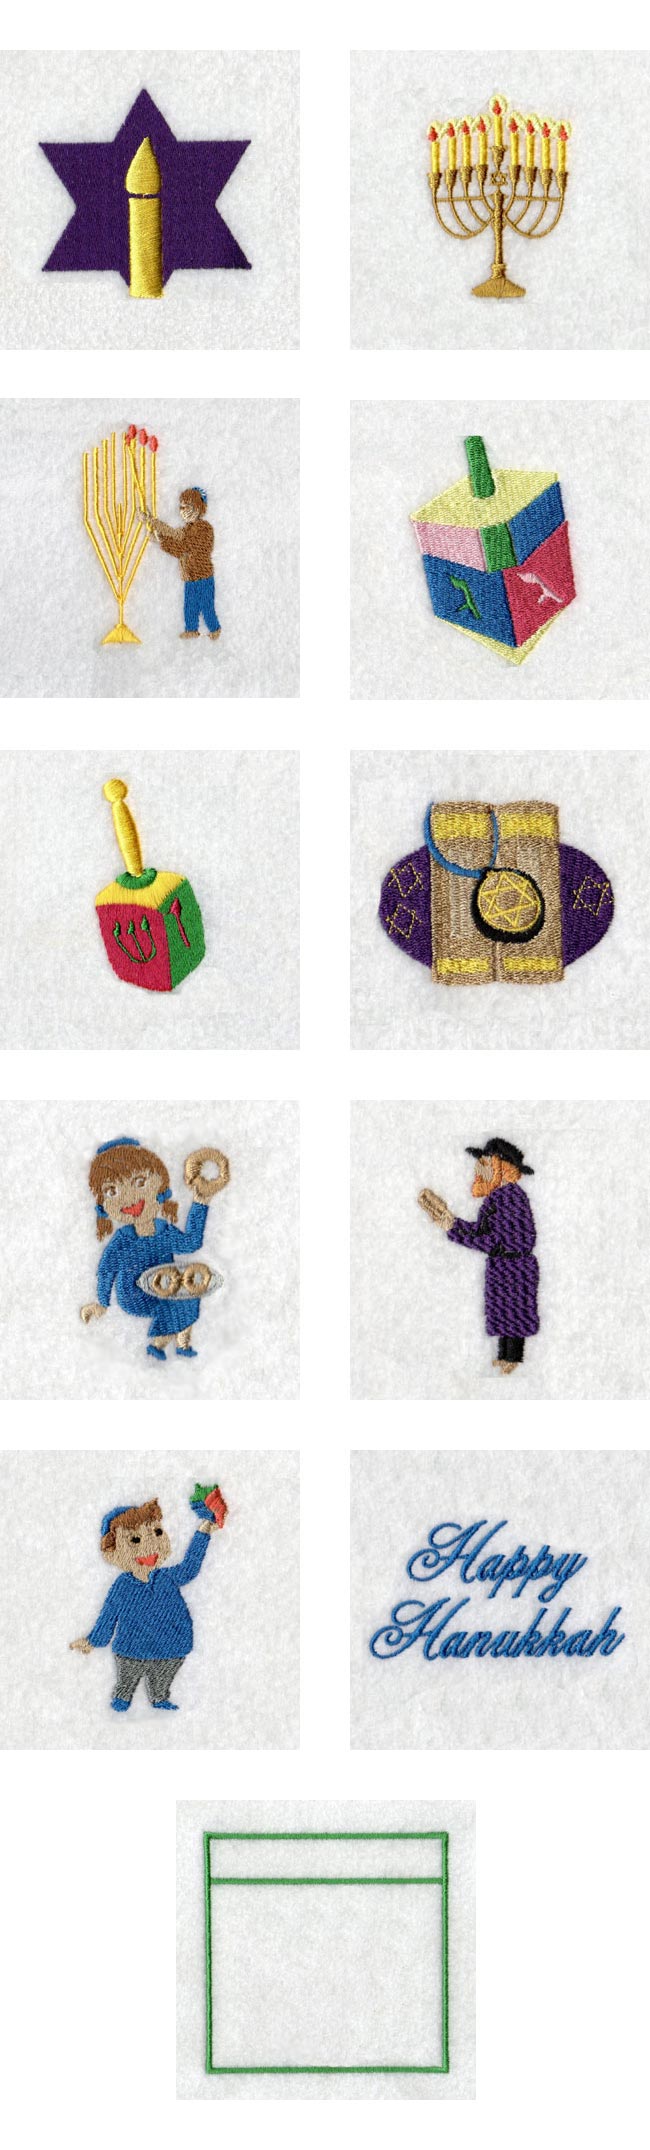 Hanukkah Calendar Embroidery Machine Design Details